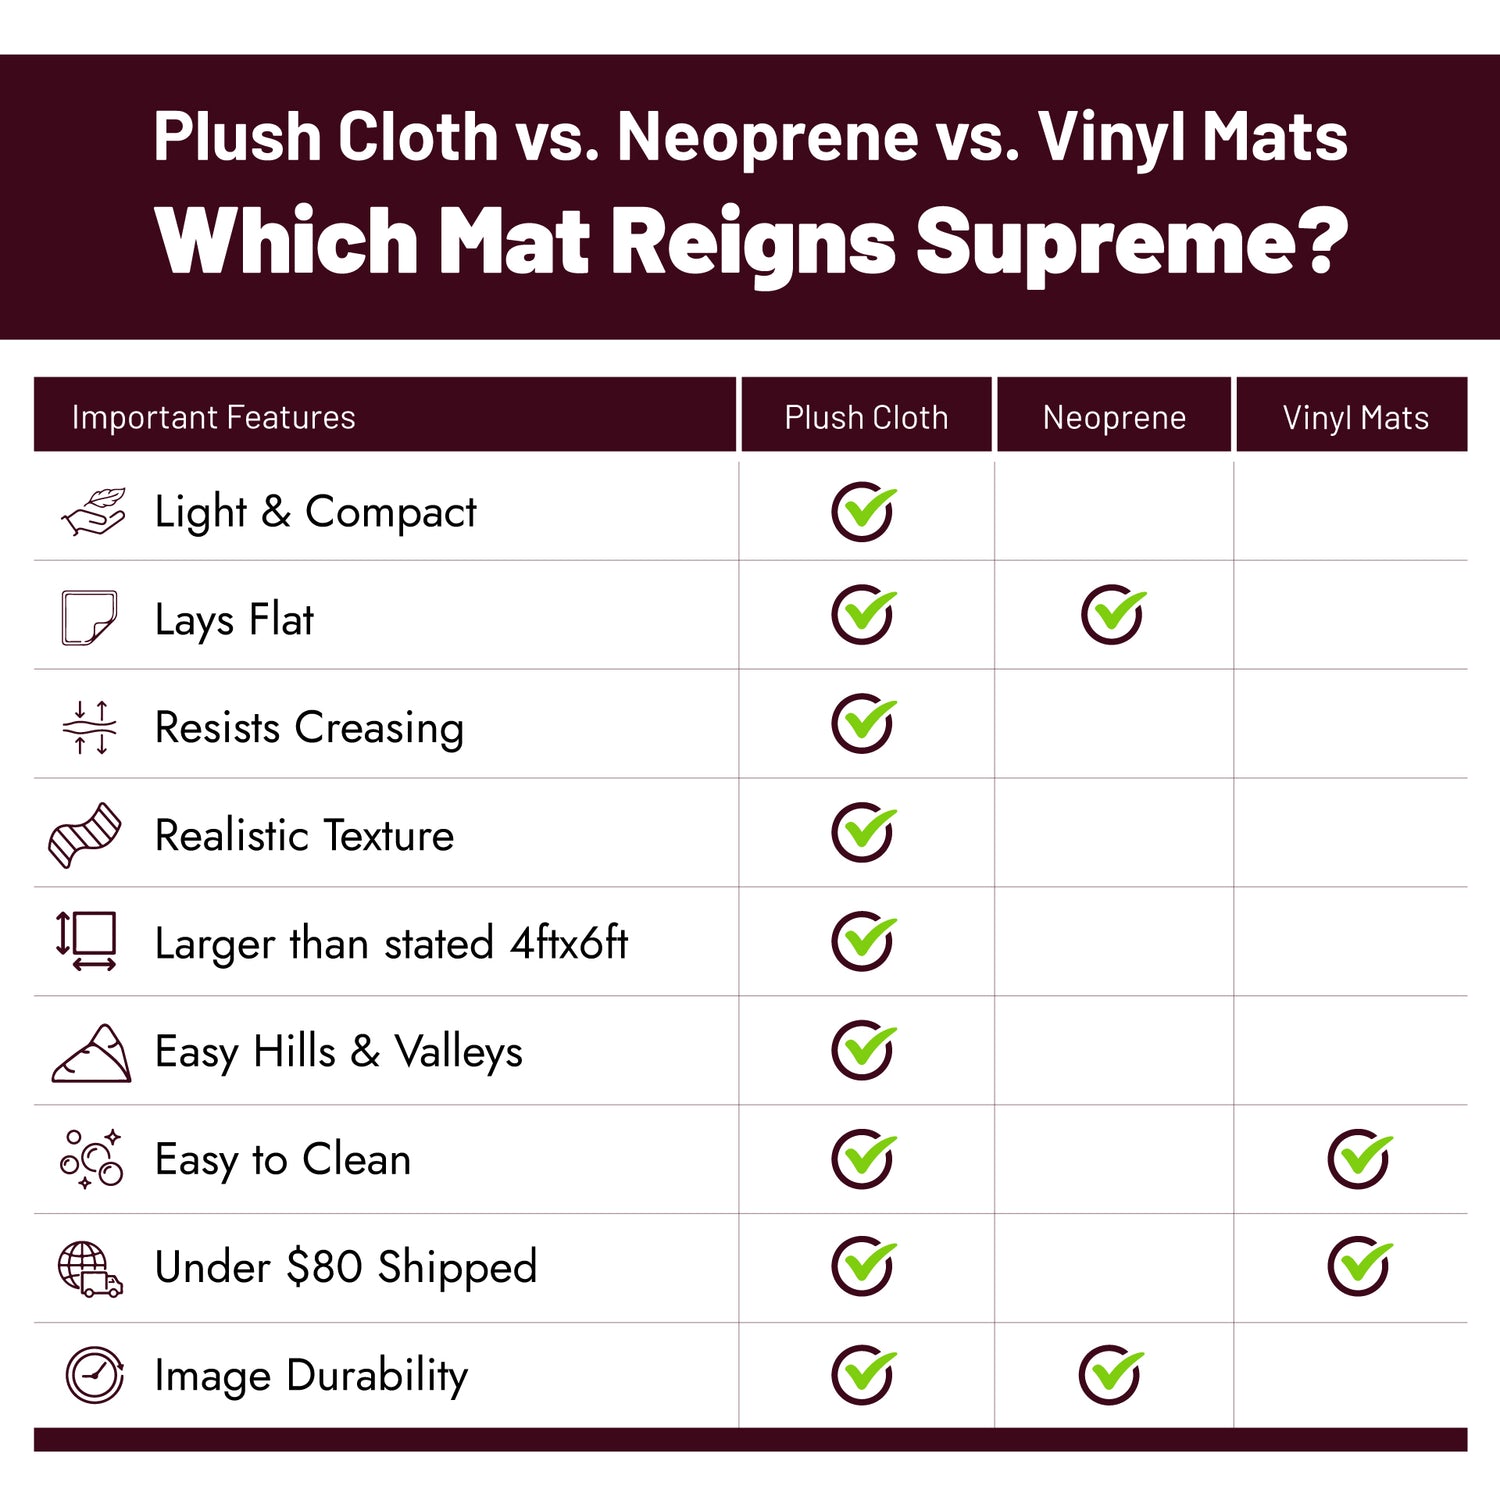 a comparison of which mat reigns supreme?